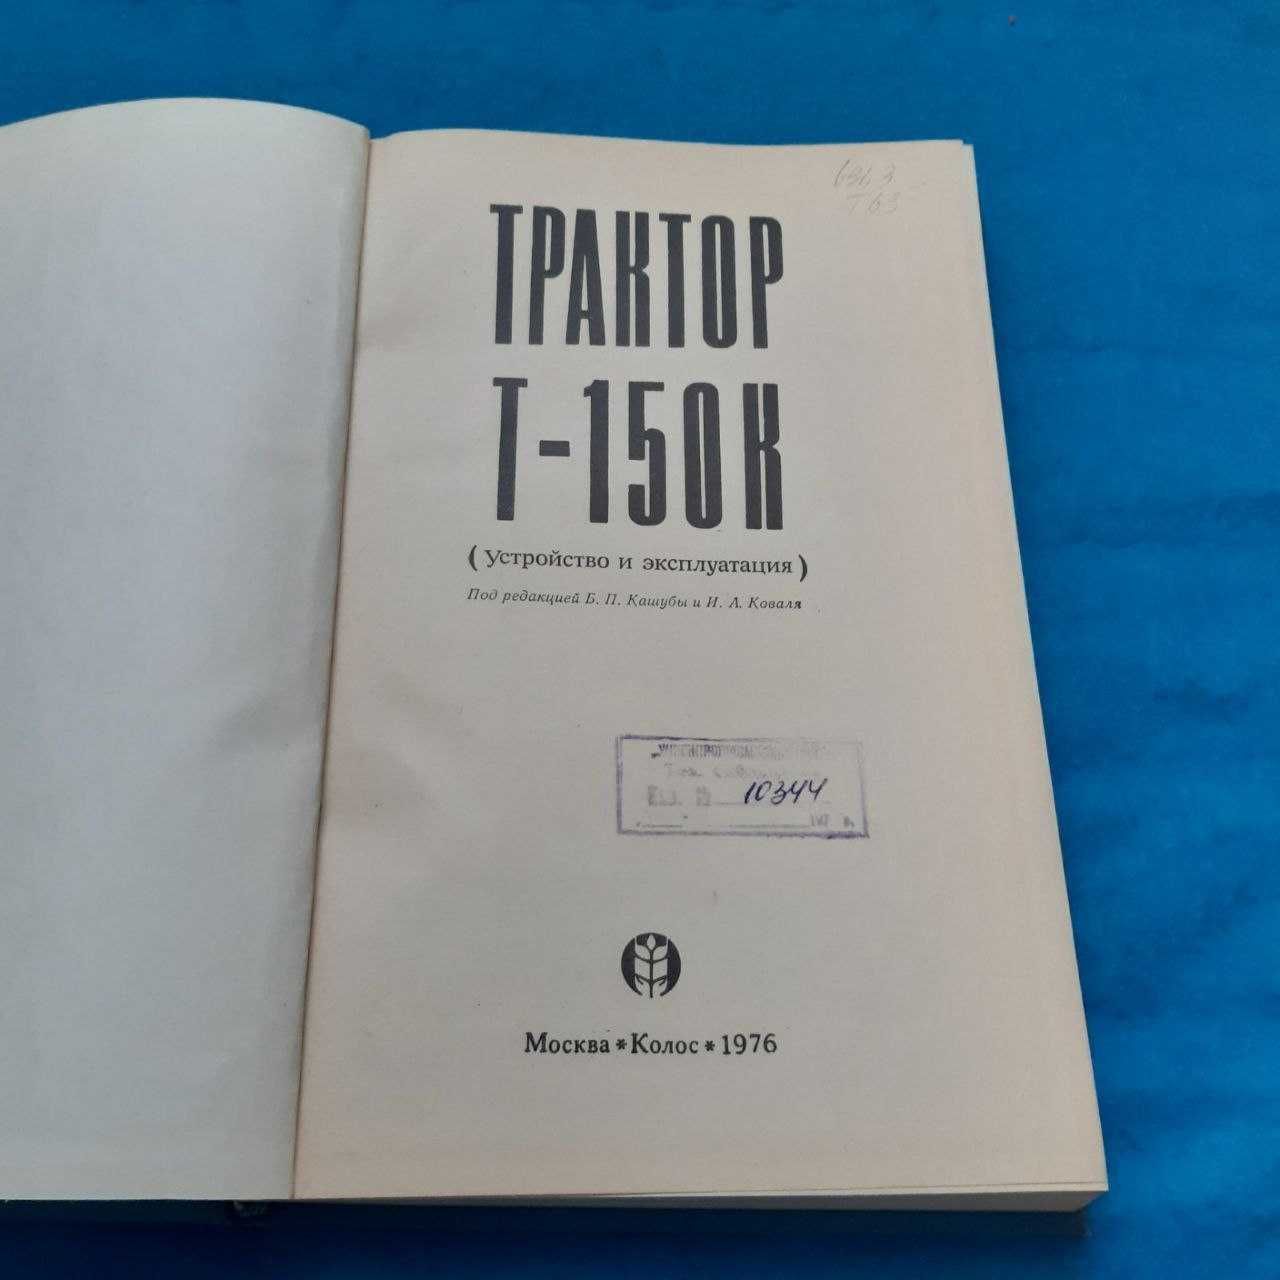 Ретро авто книга "Трактор Т-150 К Устройство и эксплуатация"